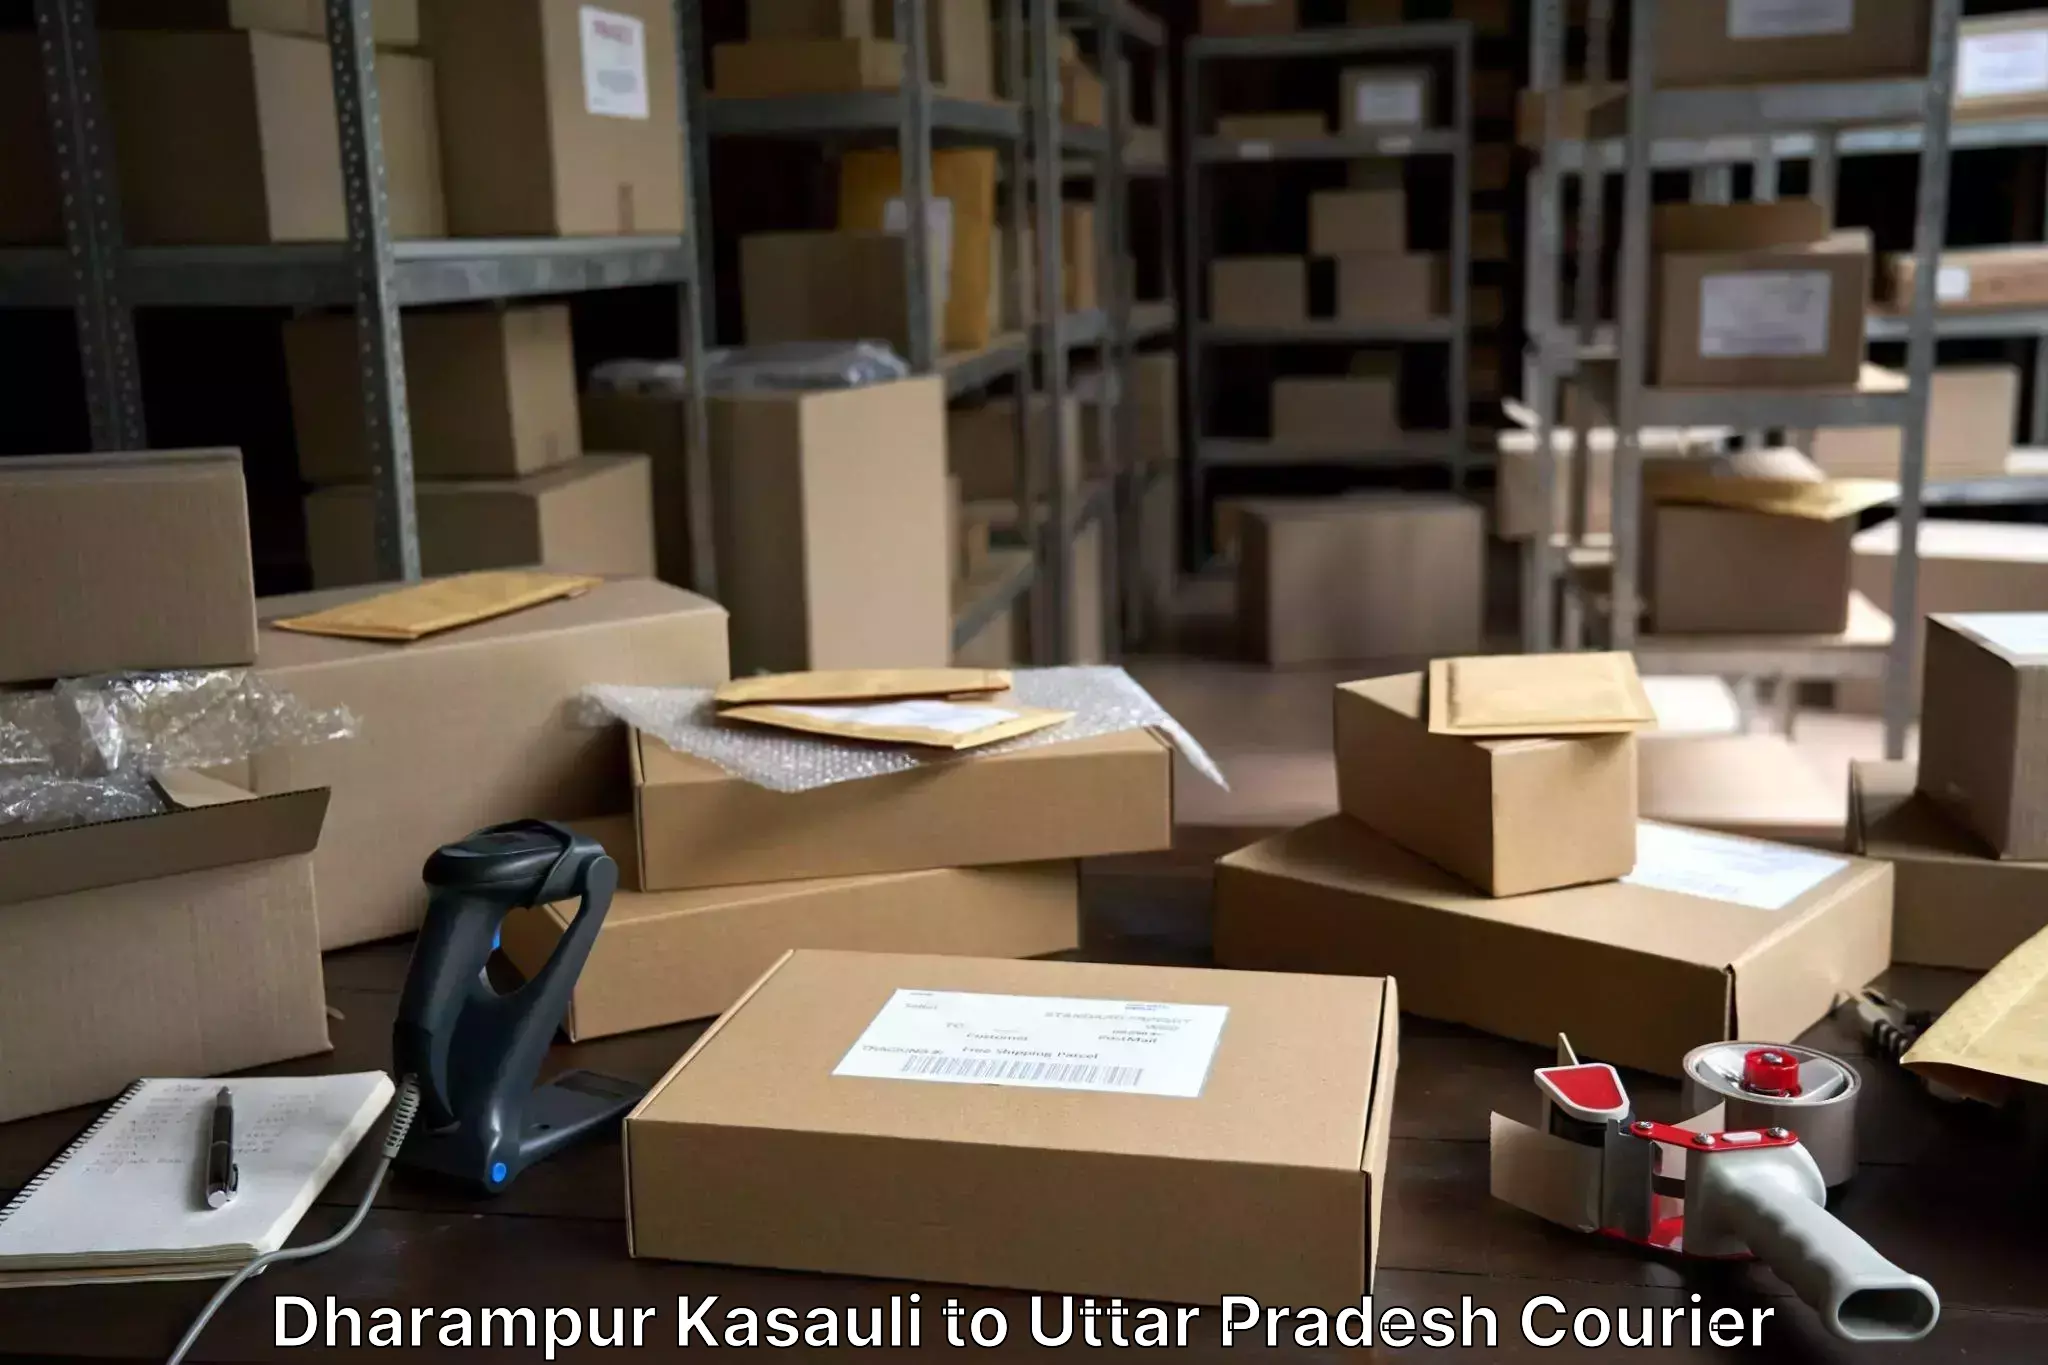 Baggage relocation service Dharampur Kasauli to Uttar Pradesh